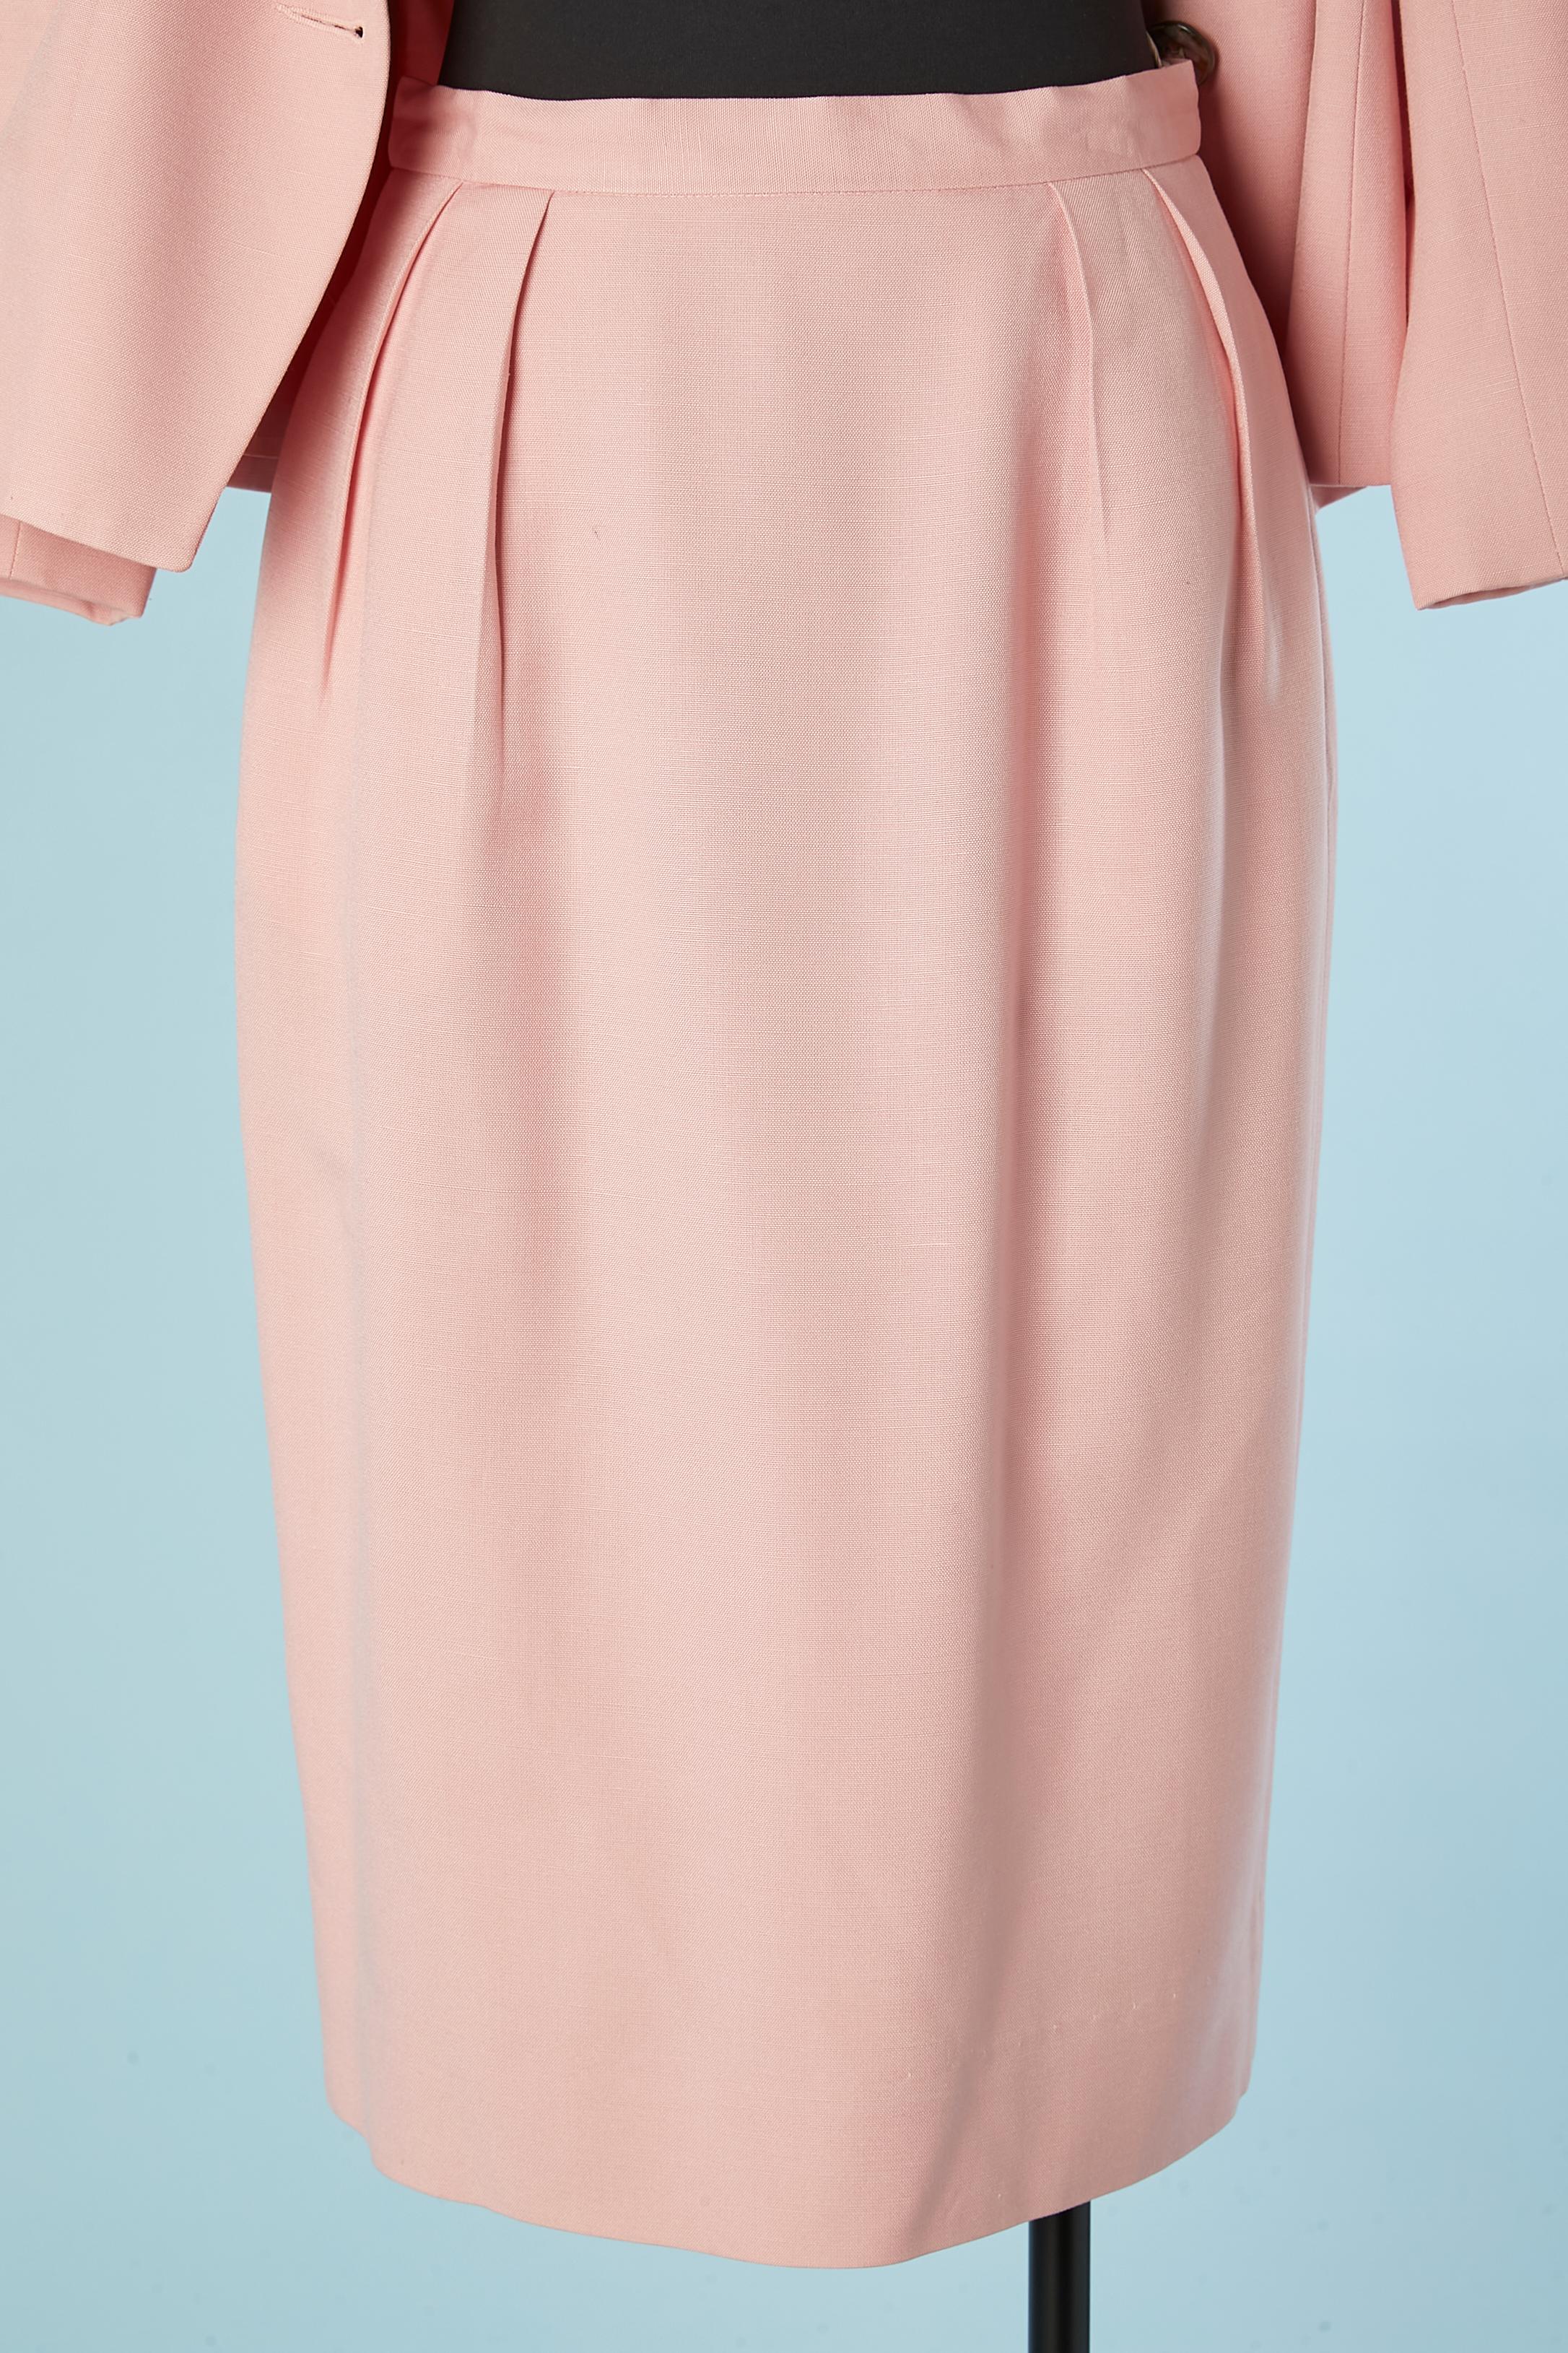 Combinaison-jupe rose avec bouton en nacre - Costume Christian Dior 